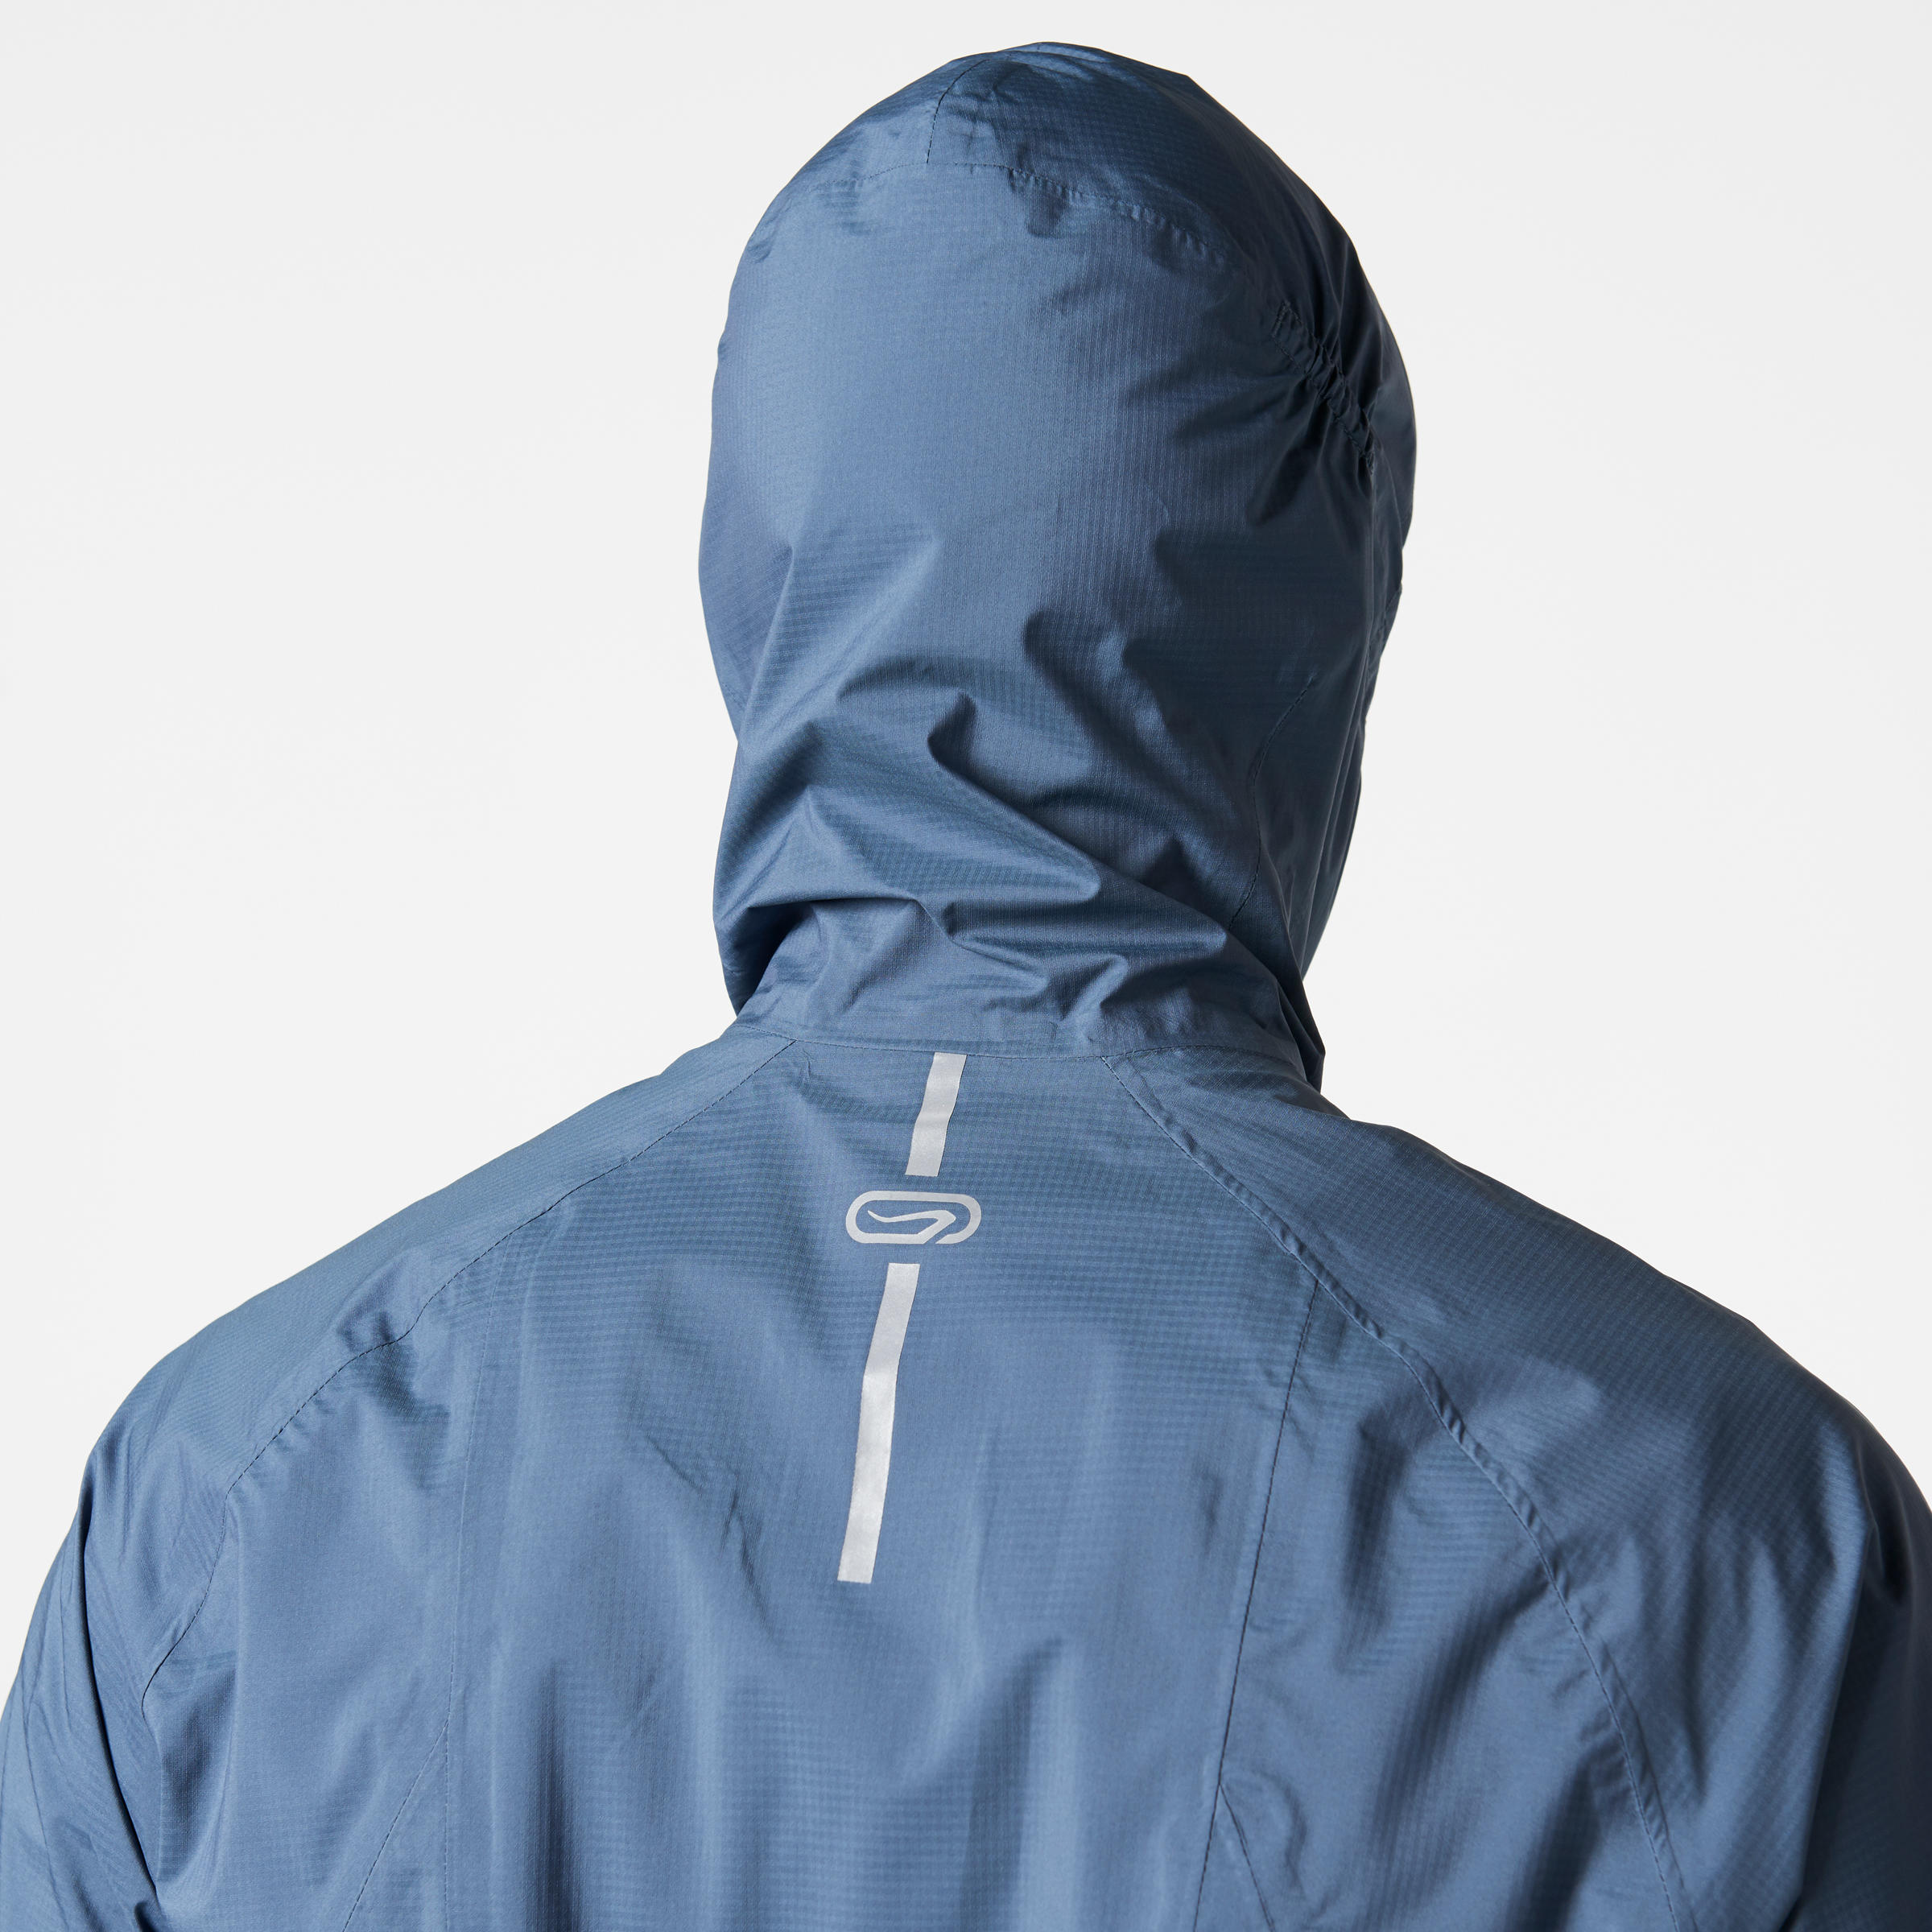 Men's Waterproof Trail Running Jacket - blue/storm grey 6/7